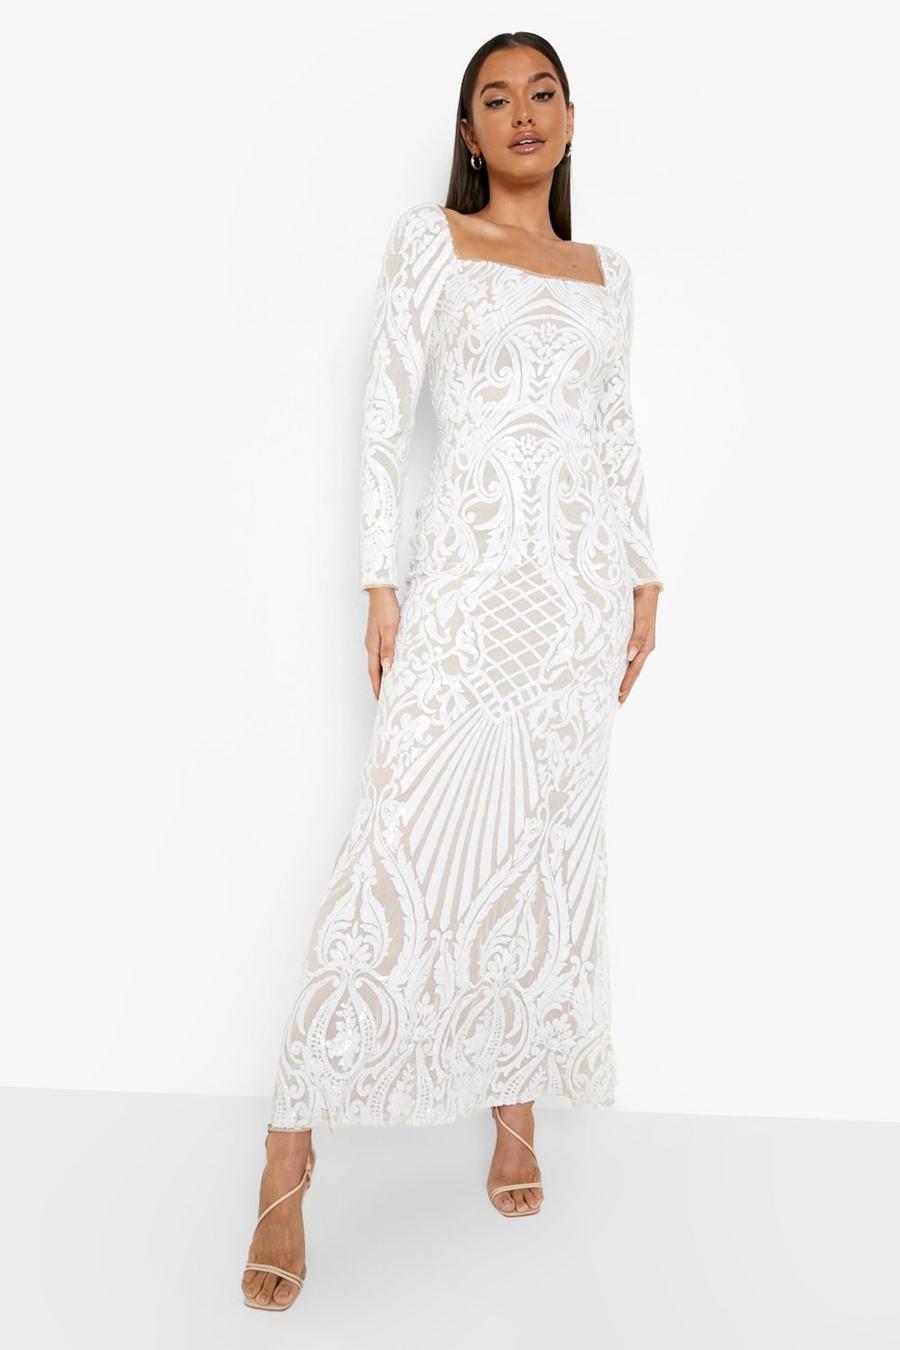 White bianco Damask Sequin Fishtail Maxi Party Dress